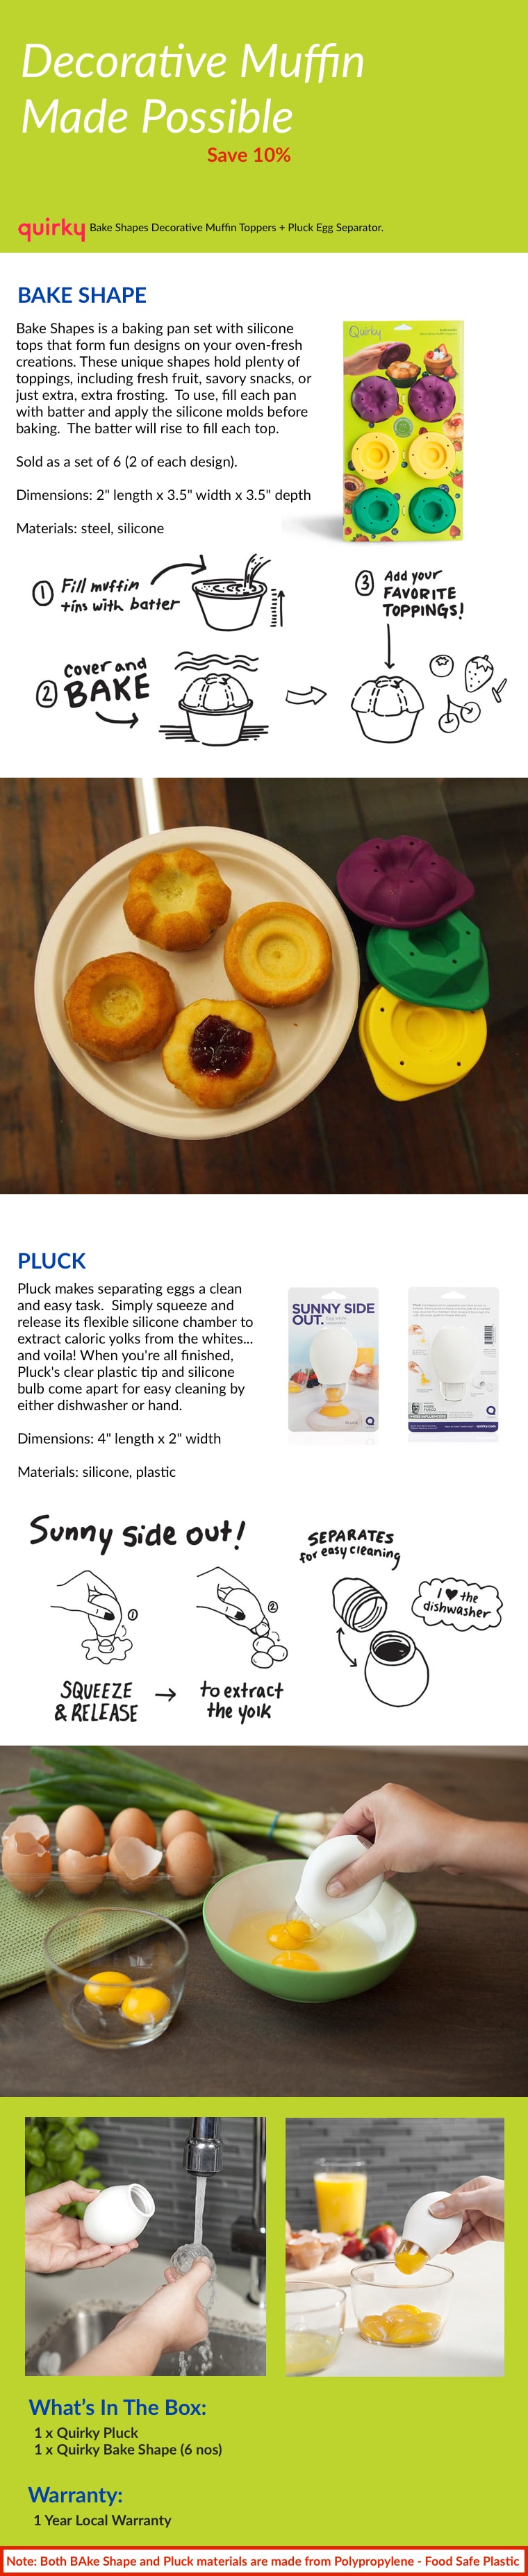 Product Description of Quirky Decorative Muffin Bundle